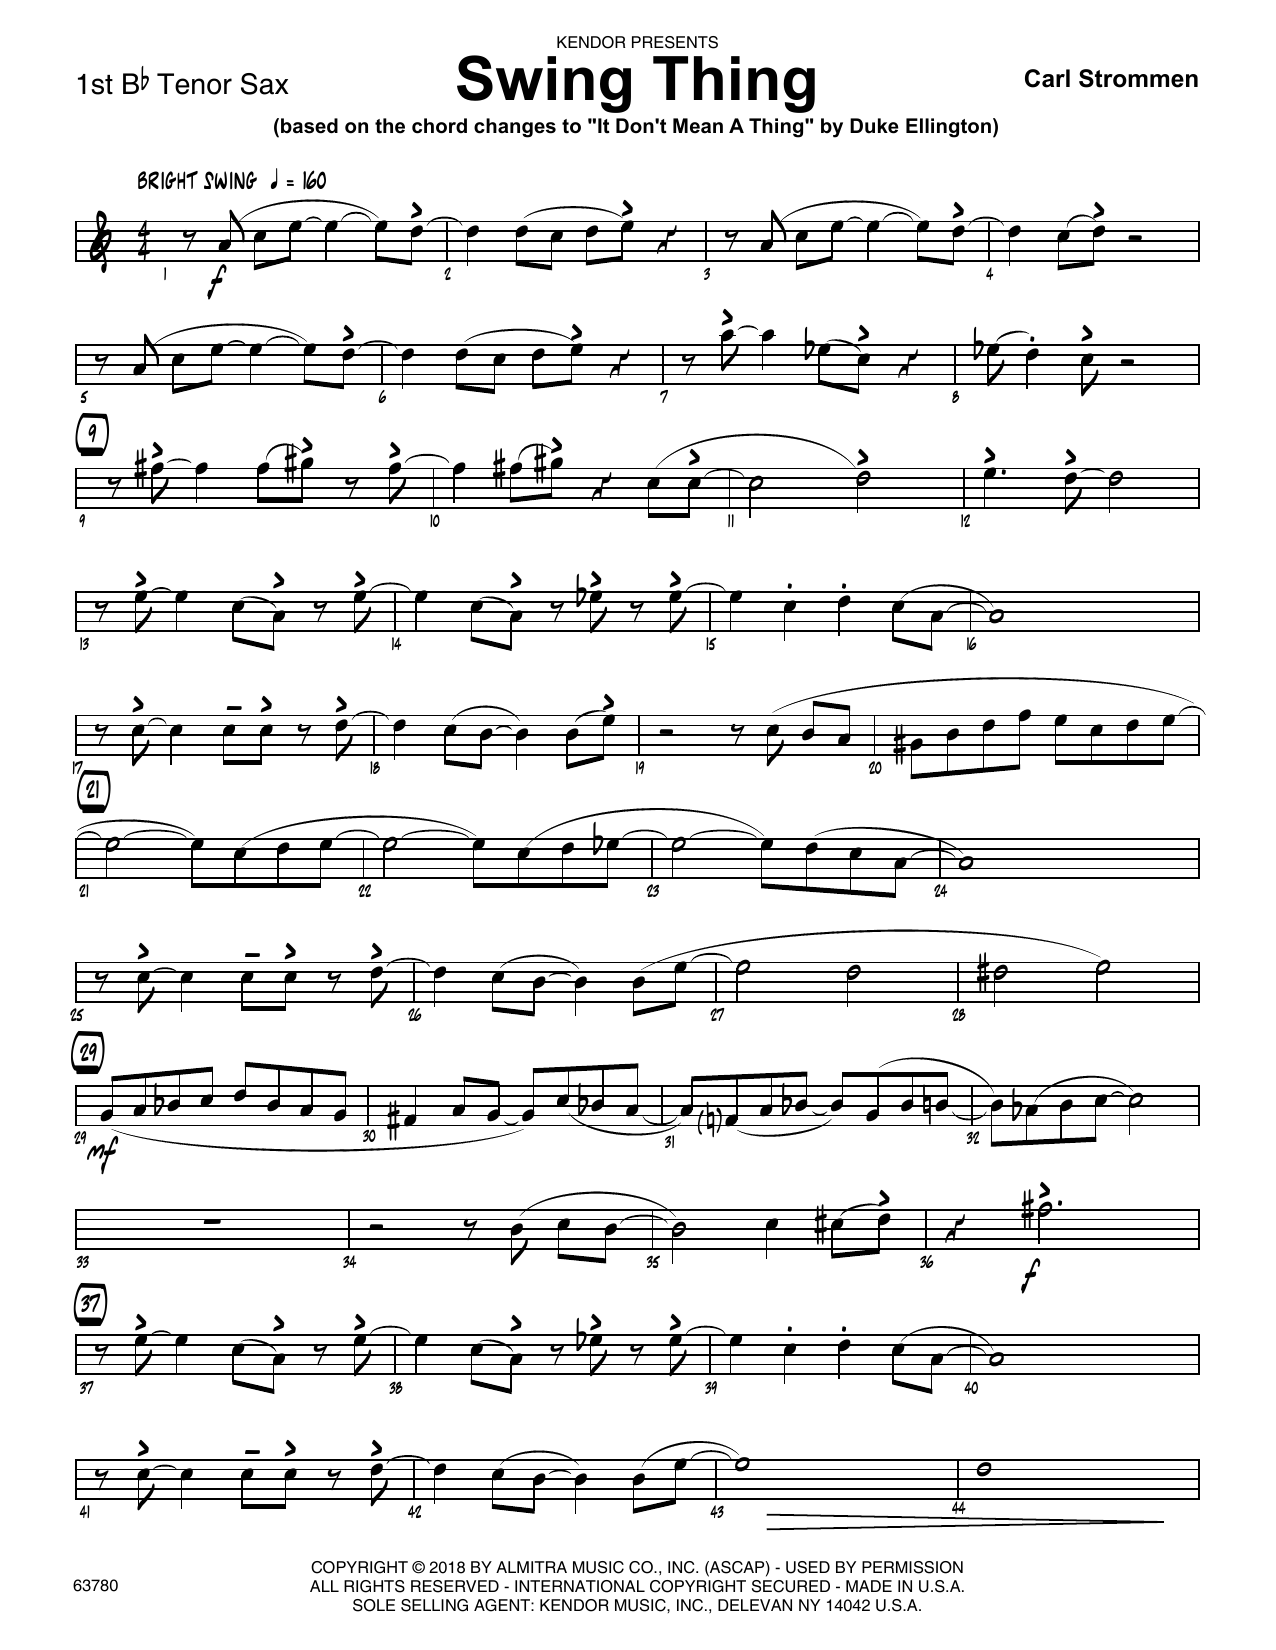 Download Carl Strommen Swing Thing - 1st Tenor Saxophone Sheet Music